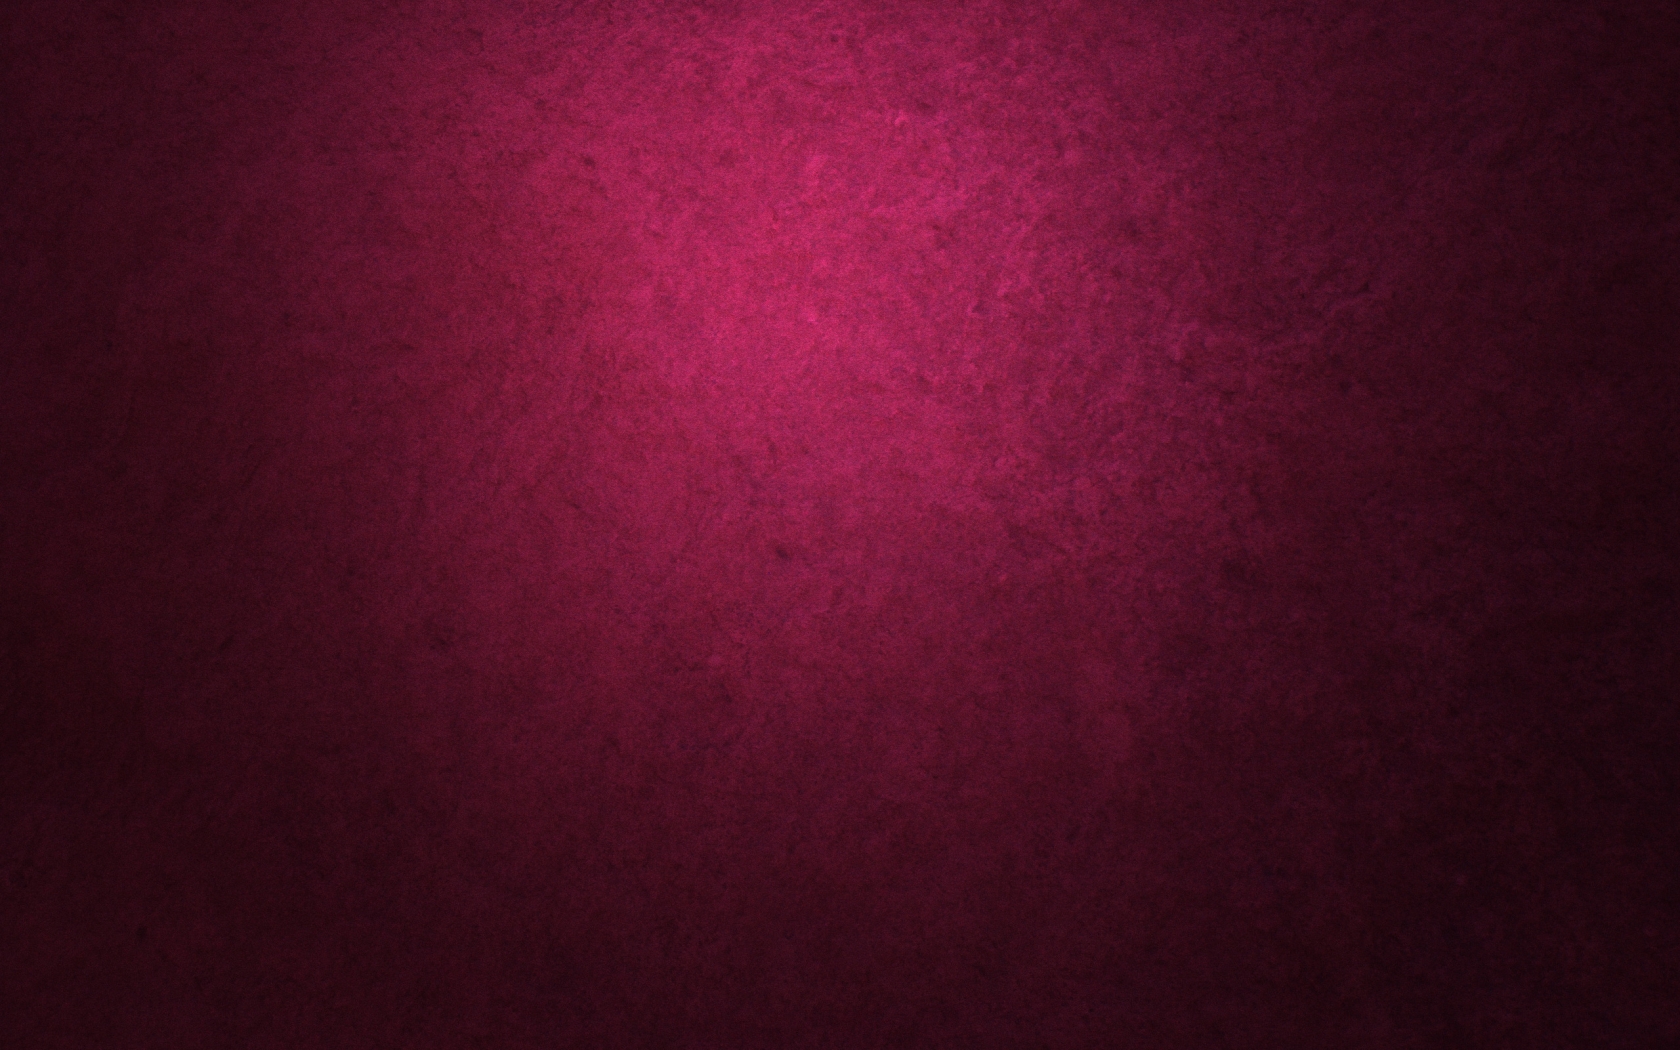 PurpleRough for 1680 x 1050 widescreen resolution